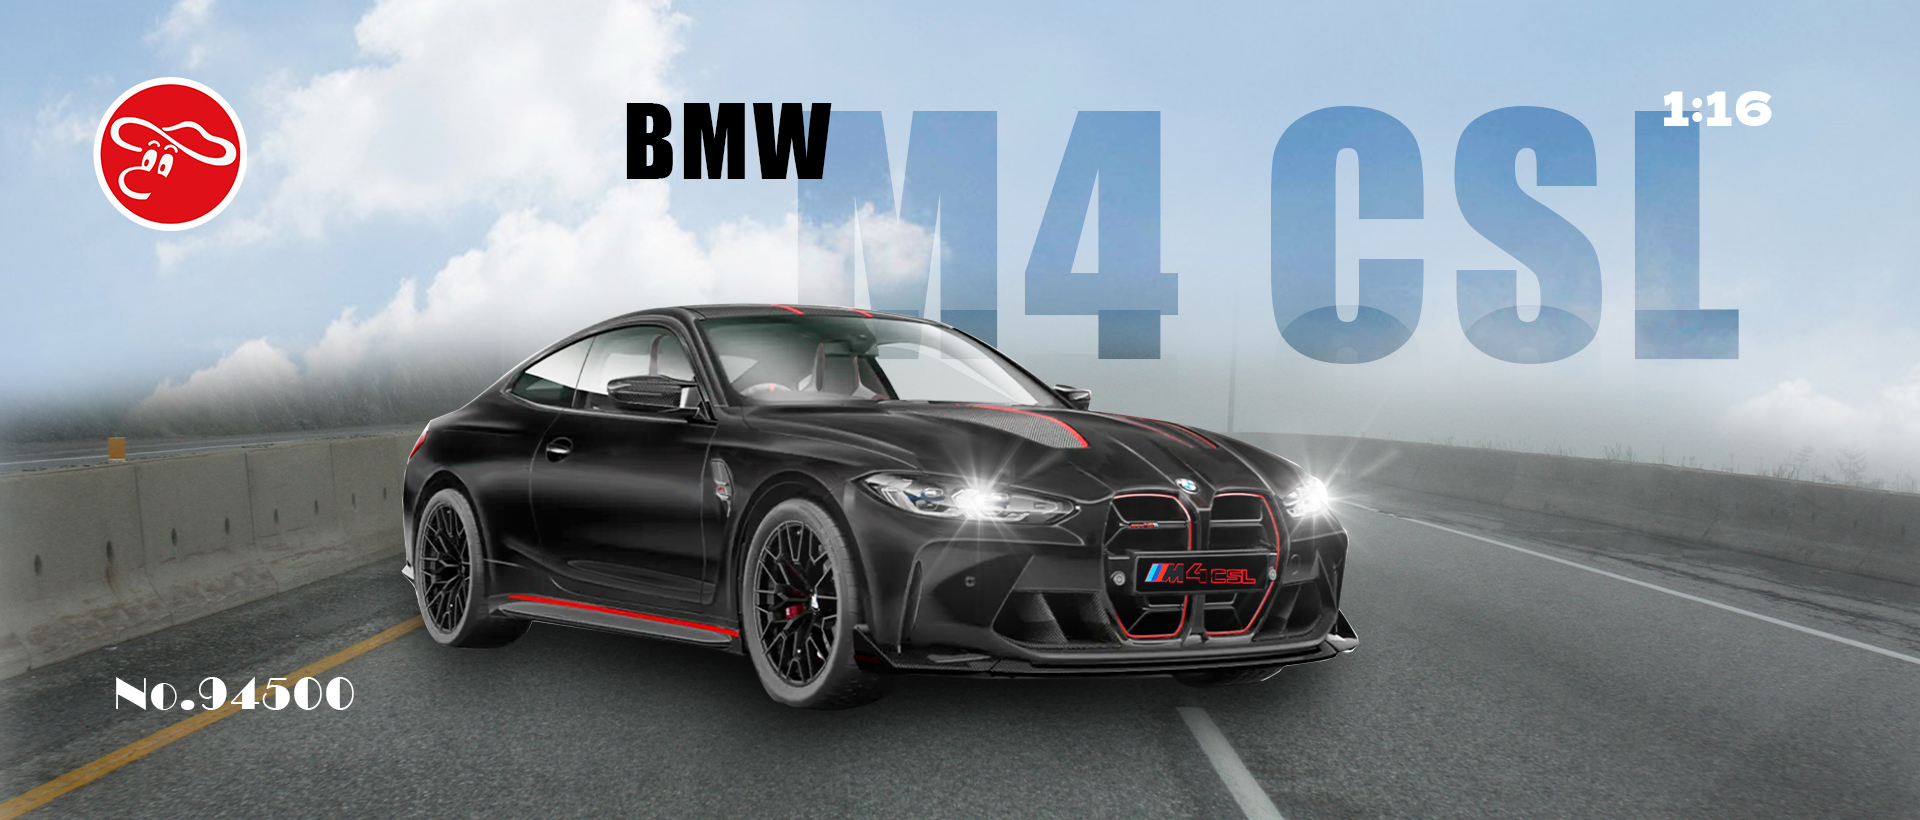 1:16 BMW M4 CSL/8